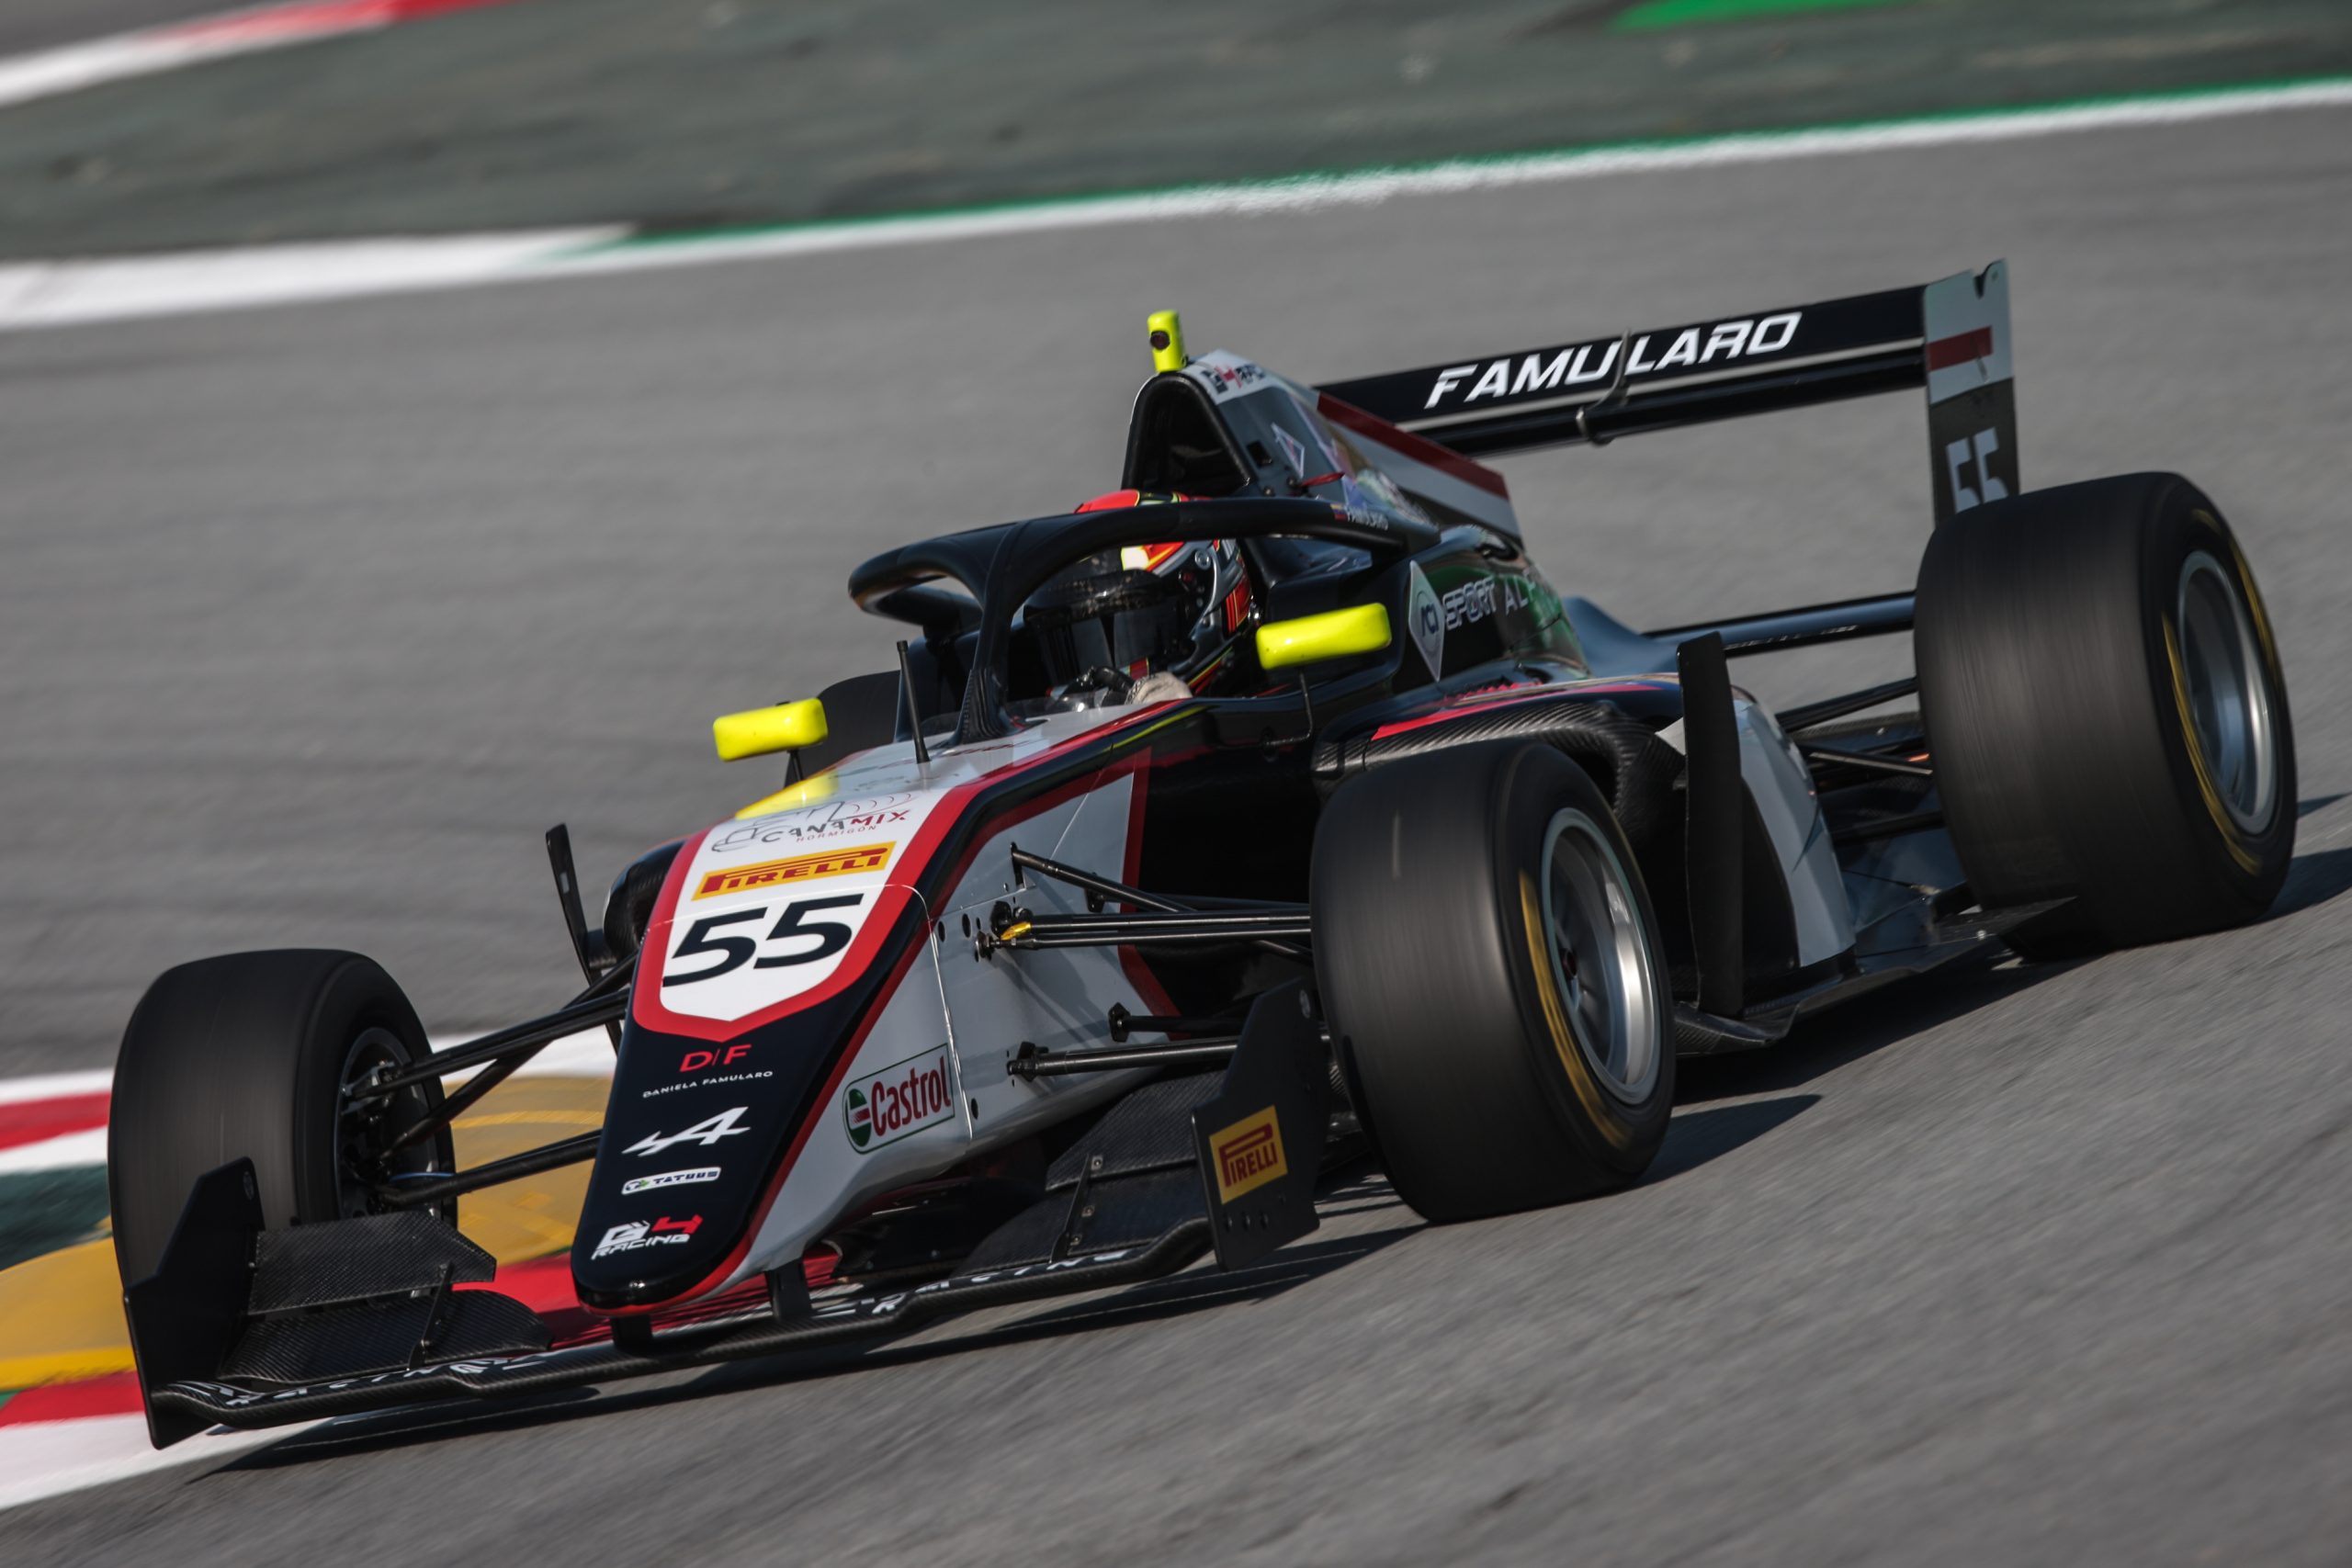 G4 Racing completes solid Barcelona weekend